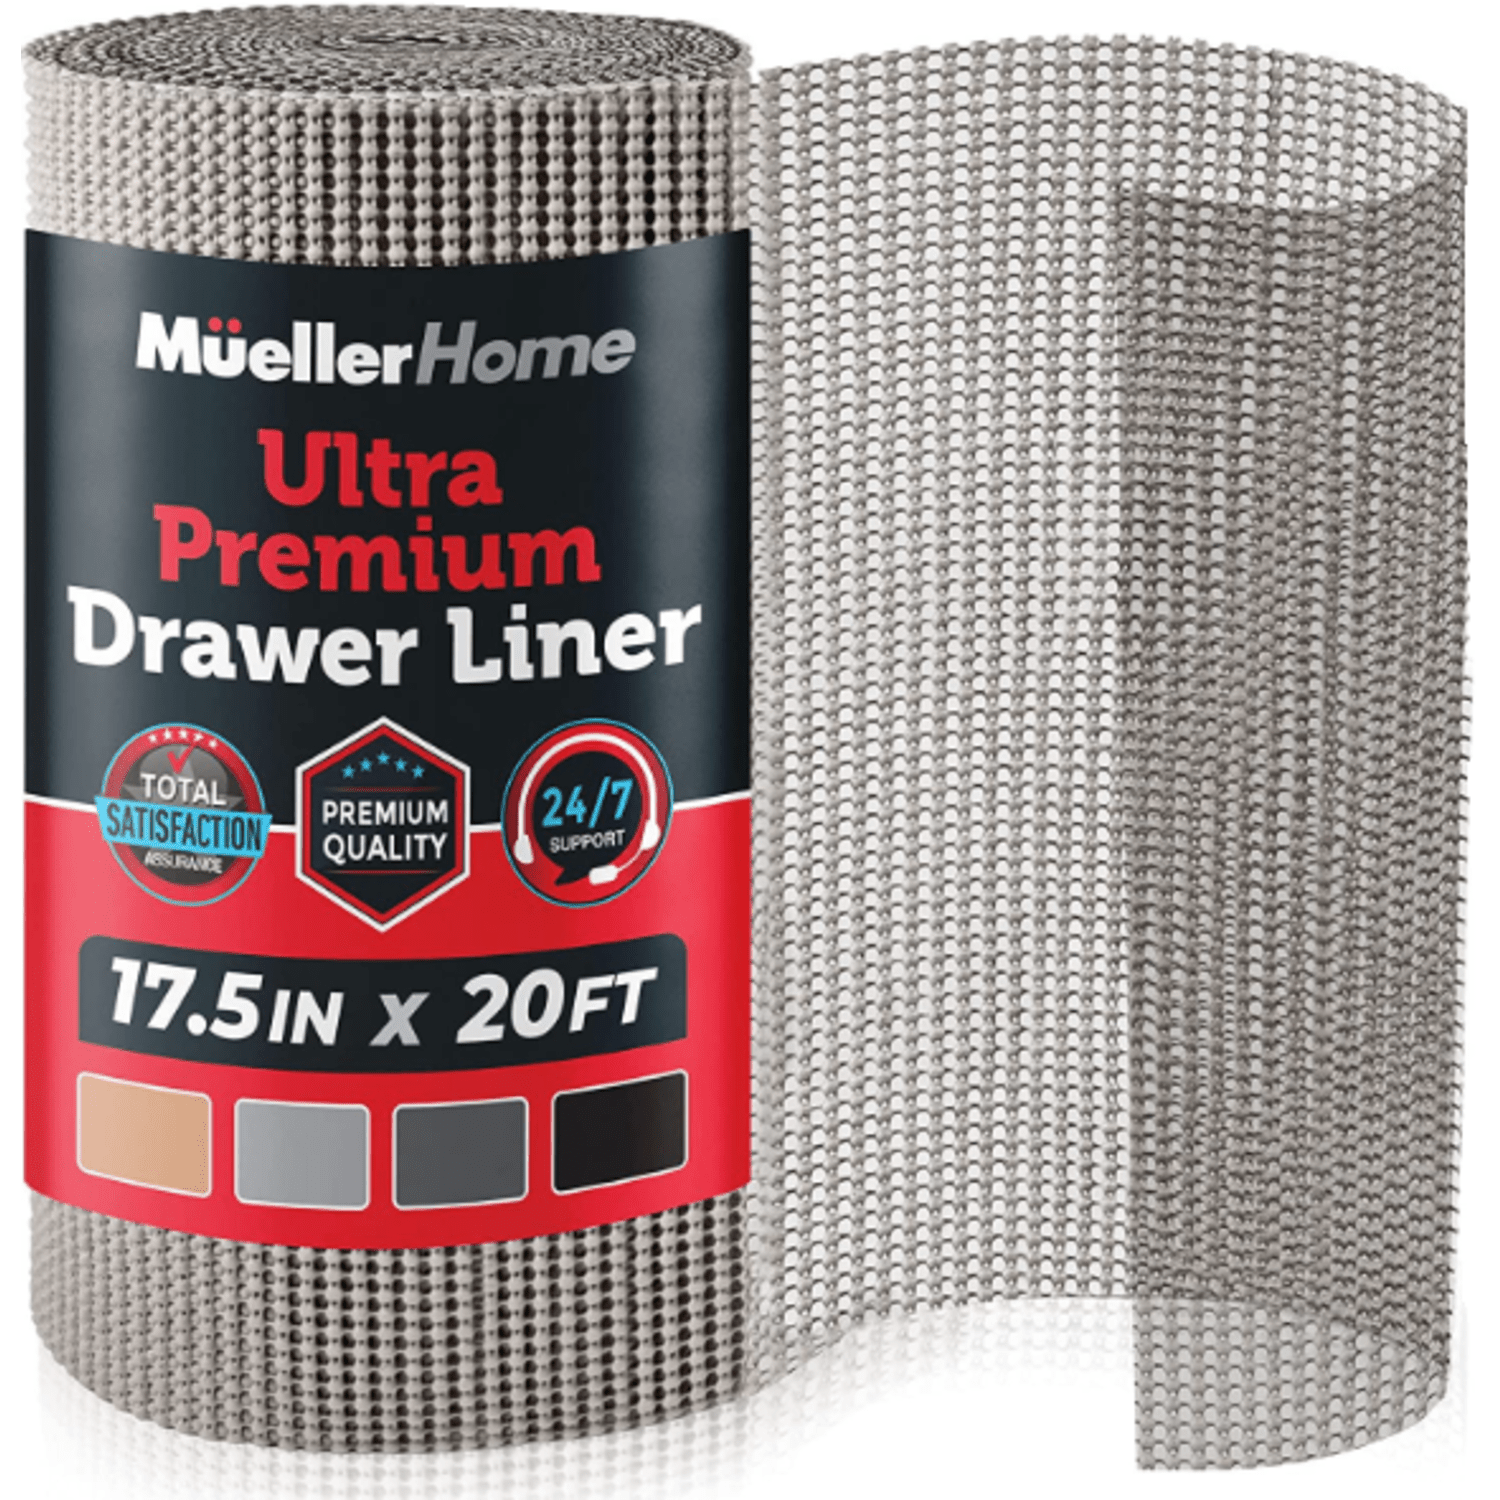 muellerhome_Ultra-Premium-Drawer-Liner-17.5in-x-20ft-LightGray